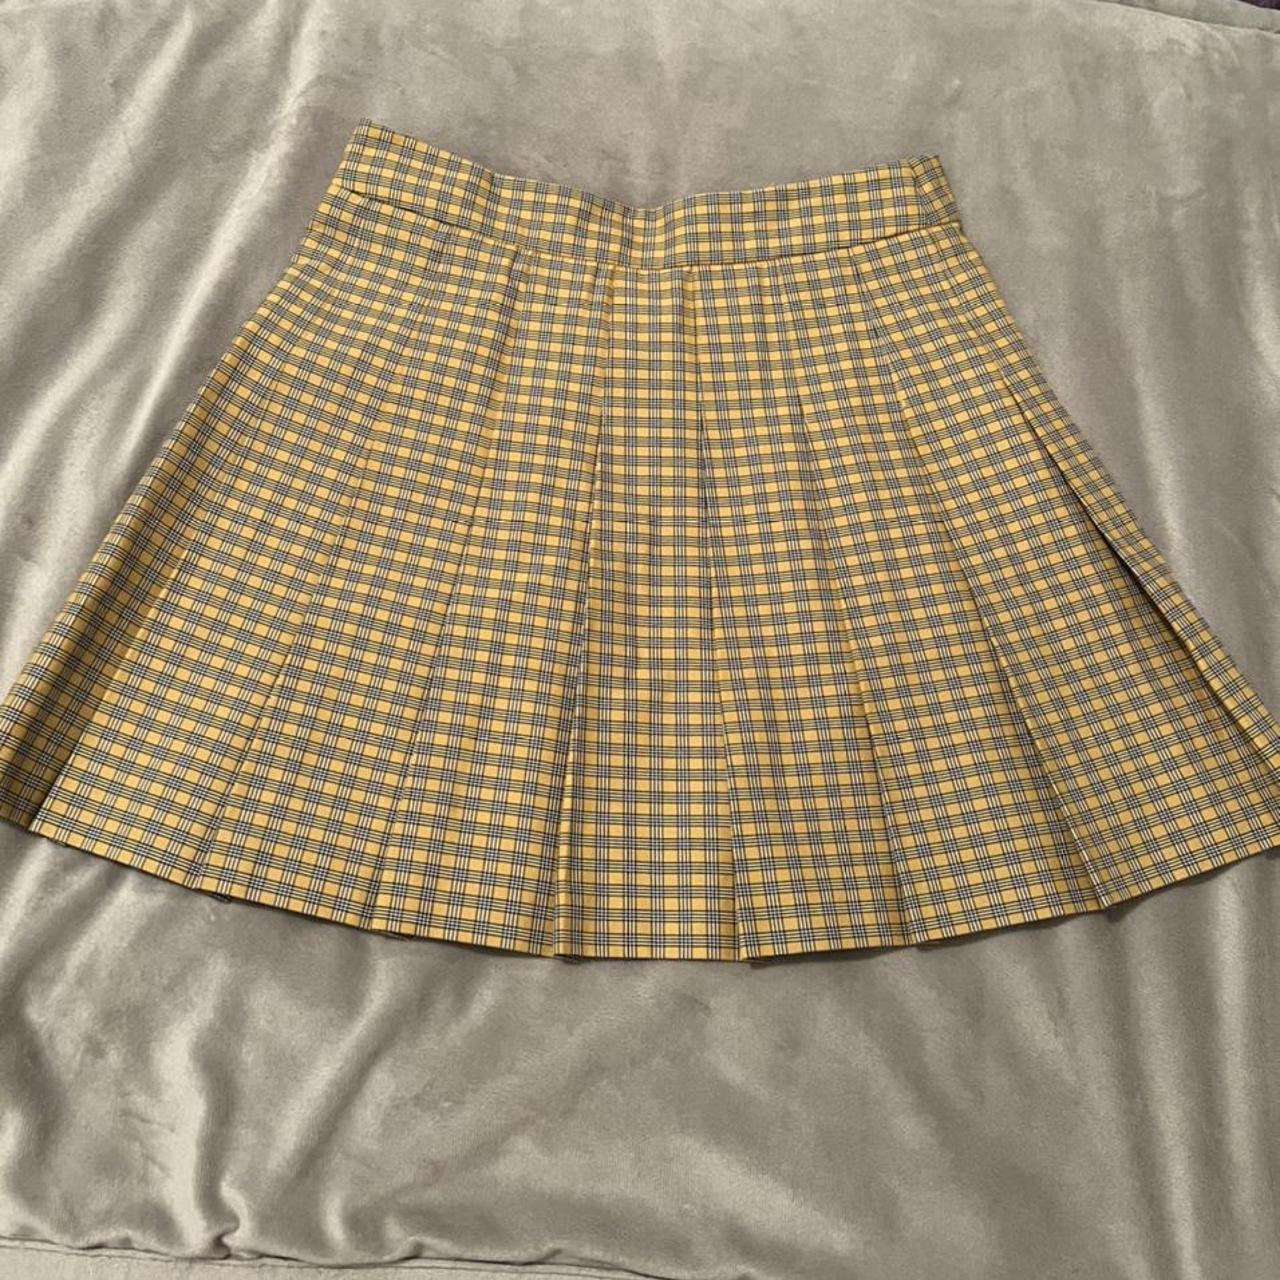 Black and yellow pleated skirt #y2k #pleatedskirt - Depop